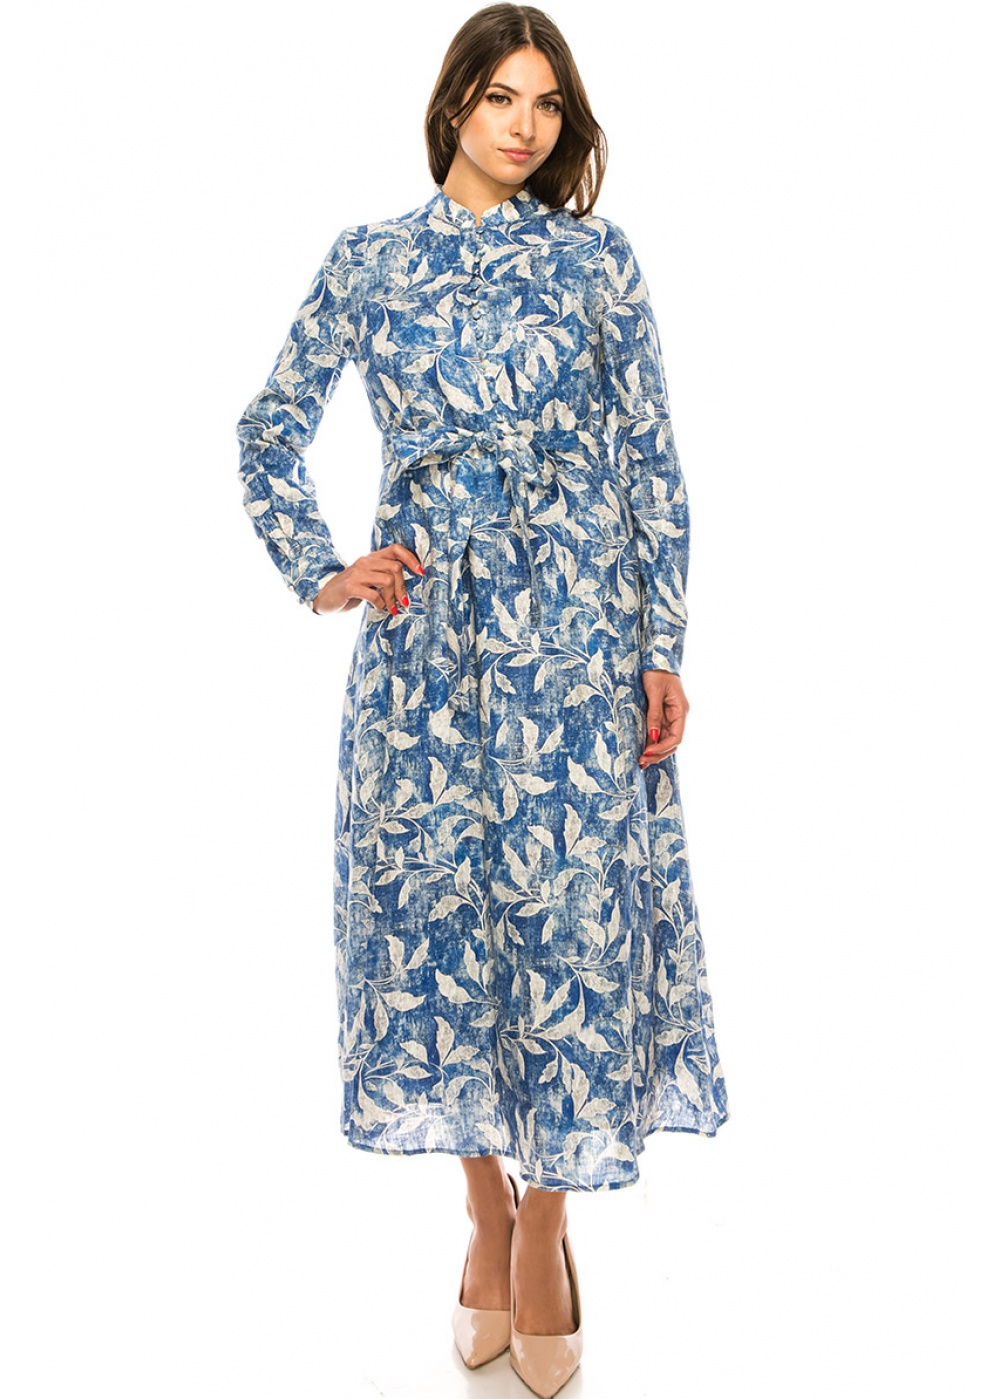 Leaf Print Dress in Blue